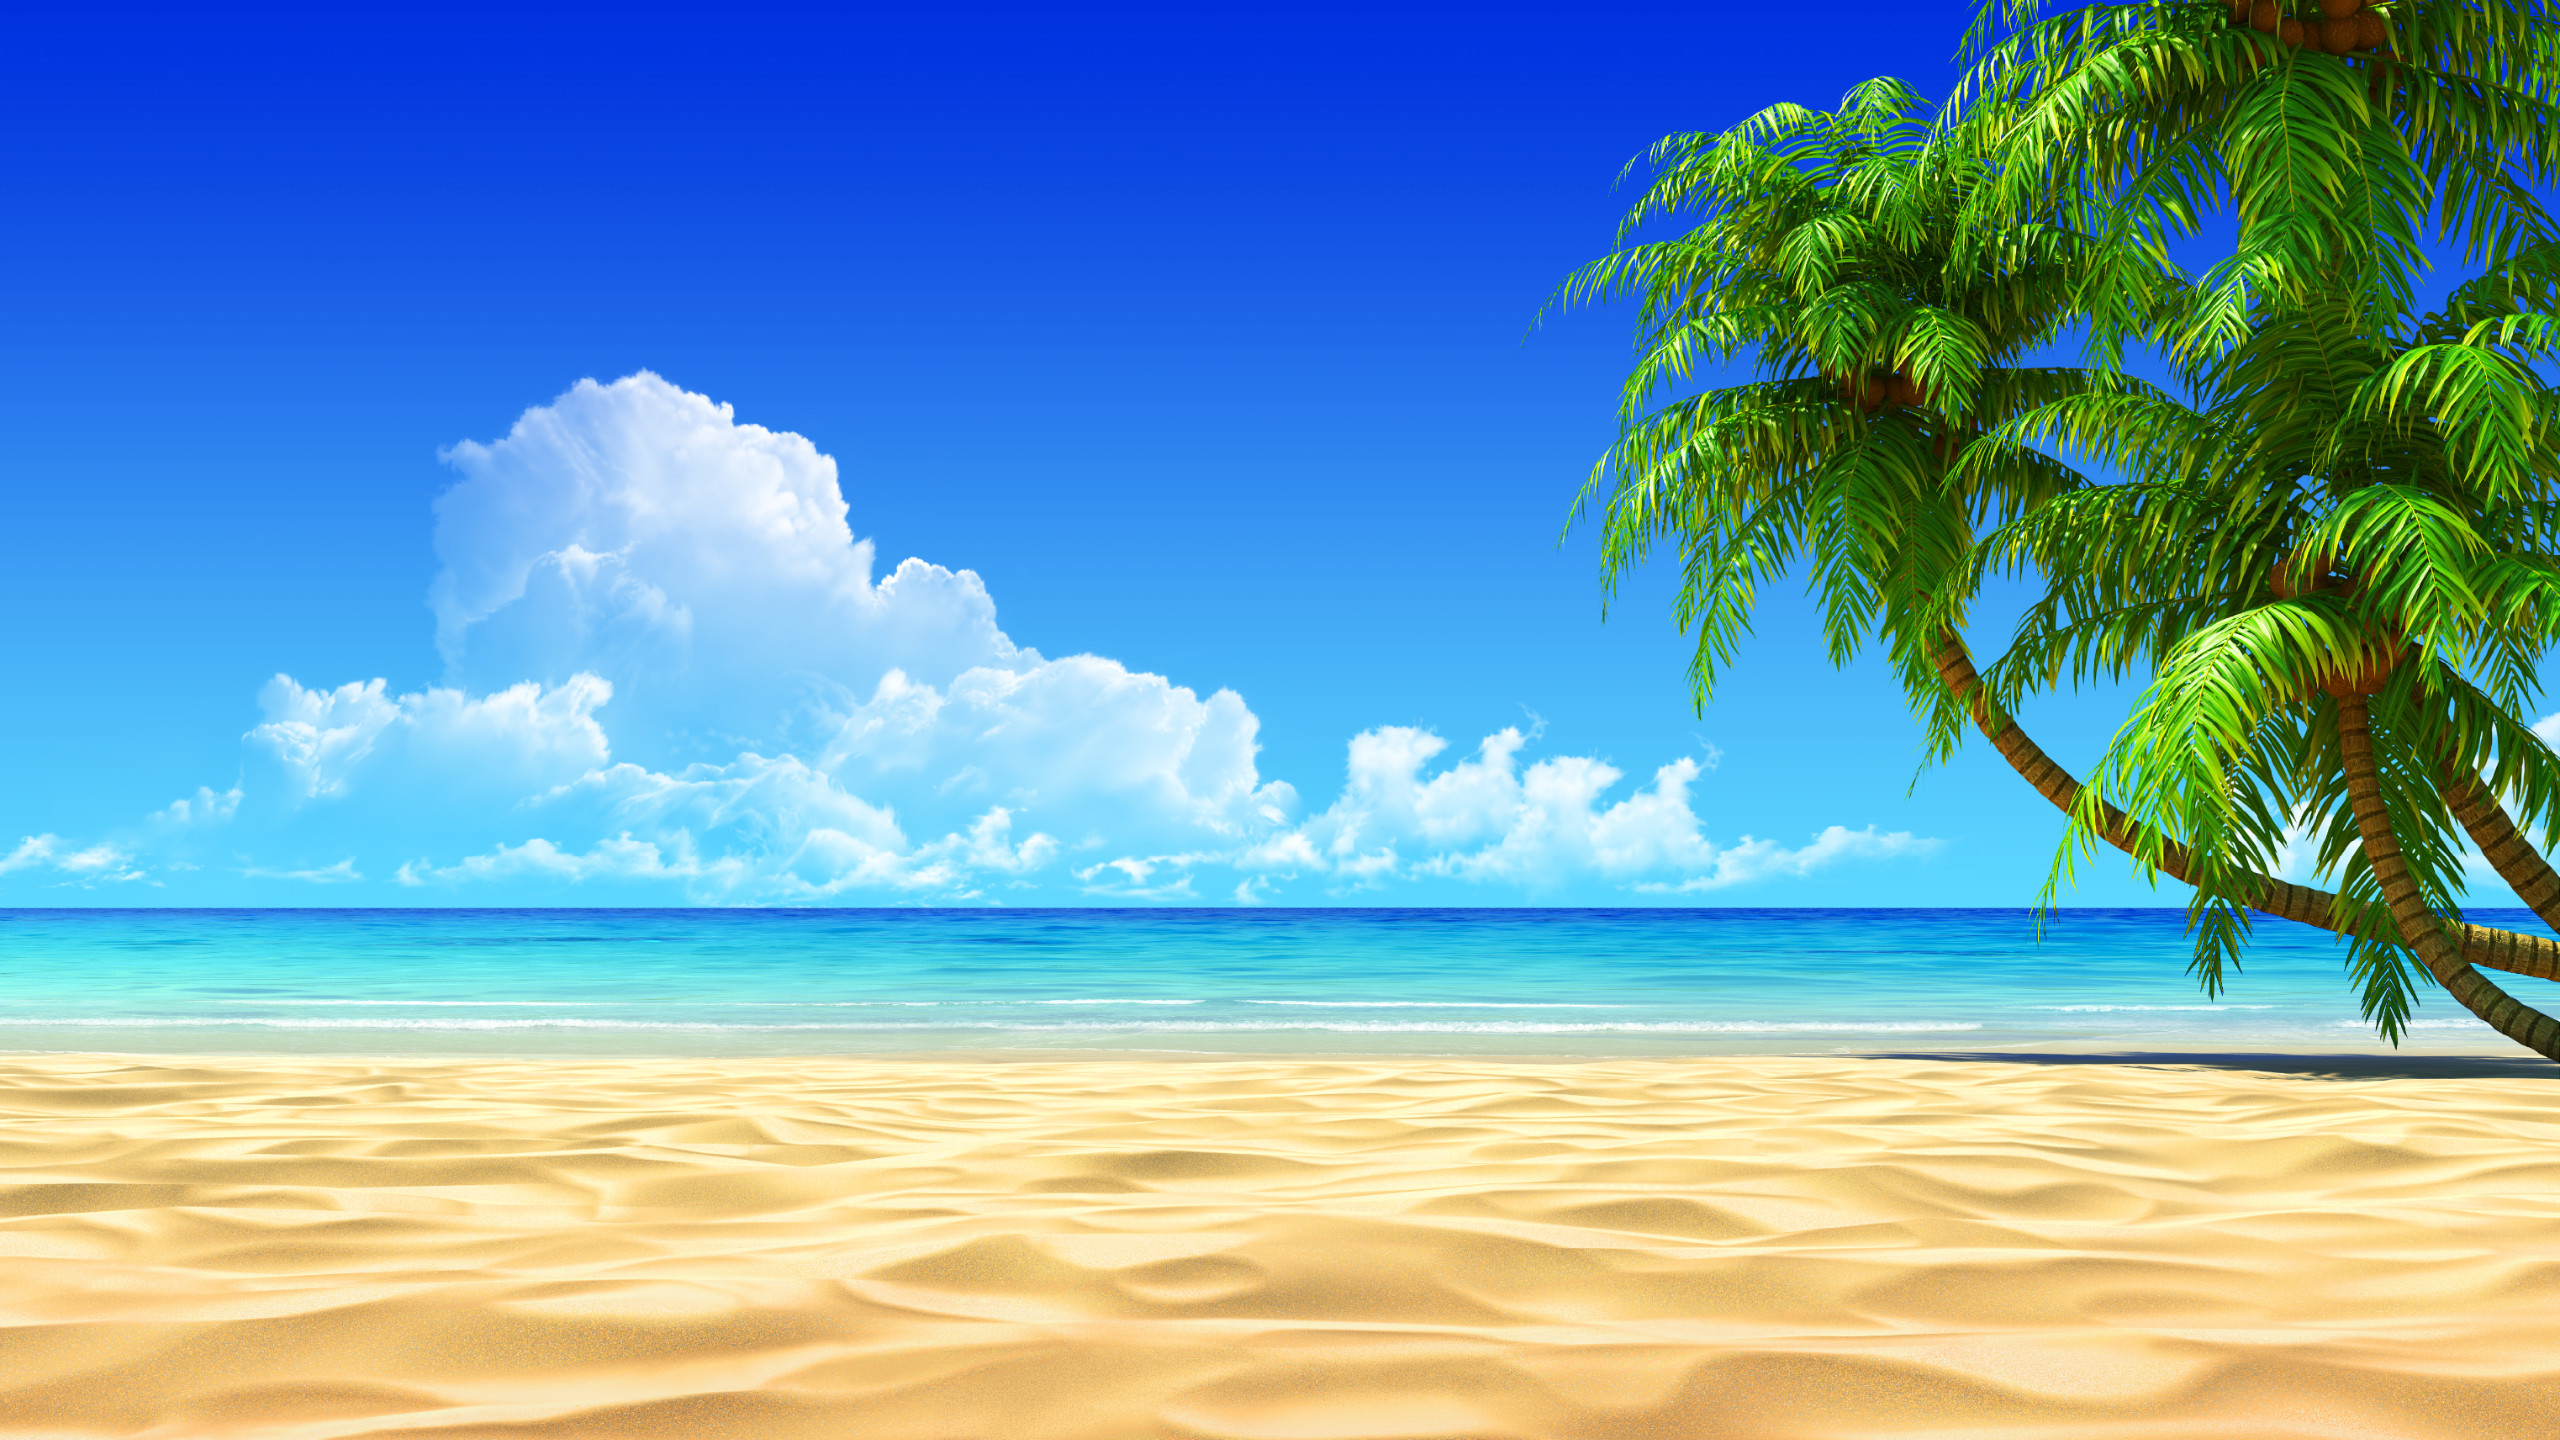 Beaches Background Image